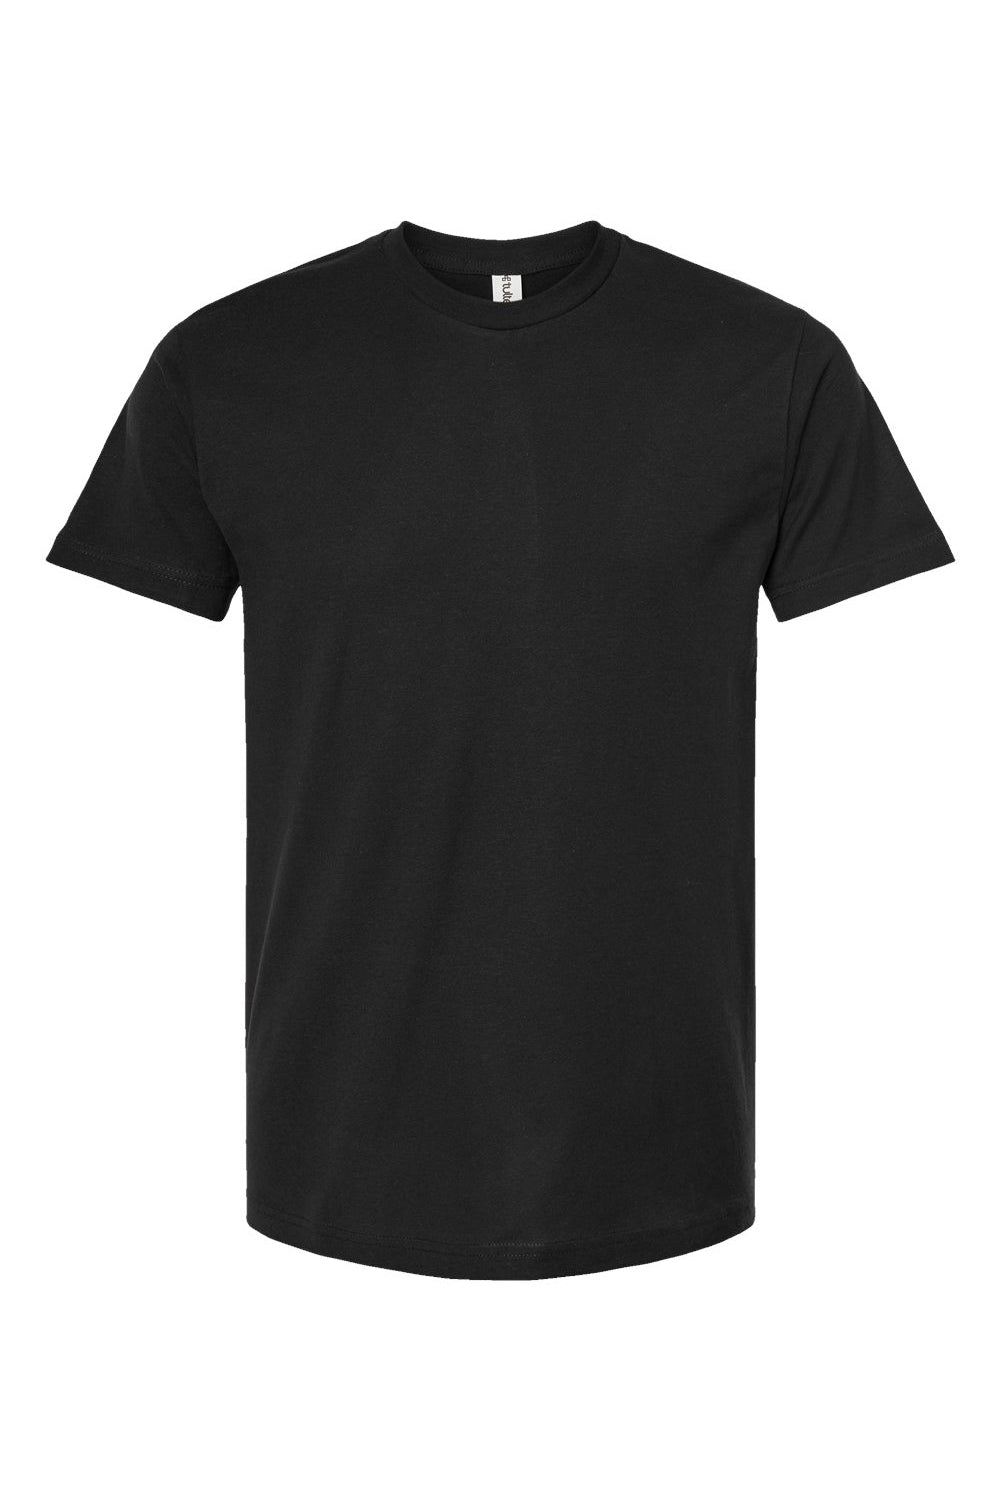 Tultex 202 Mens Fine Jersey Short Sleeve Crewneck T-Shirt Black Flat Front